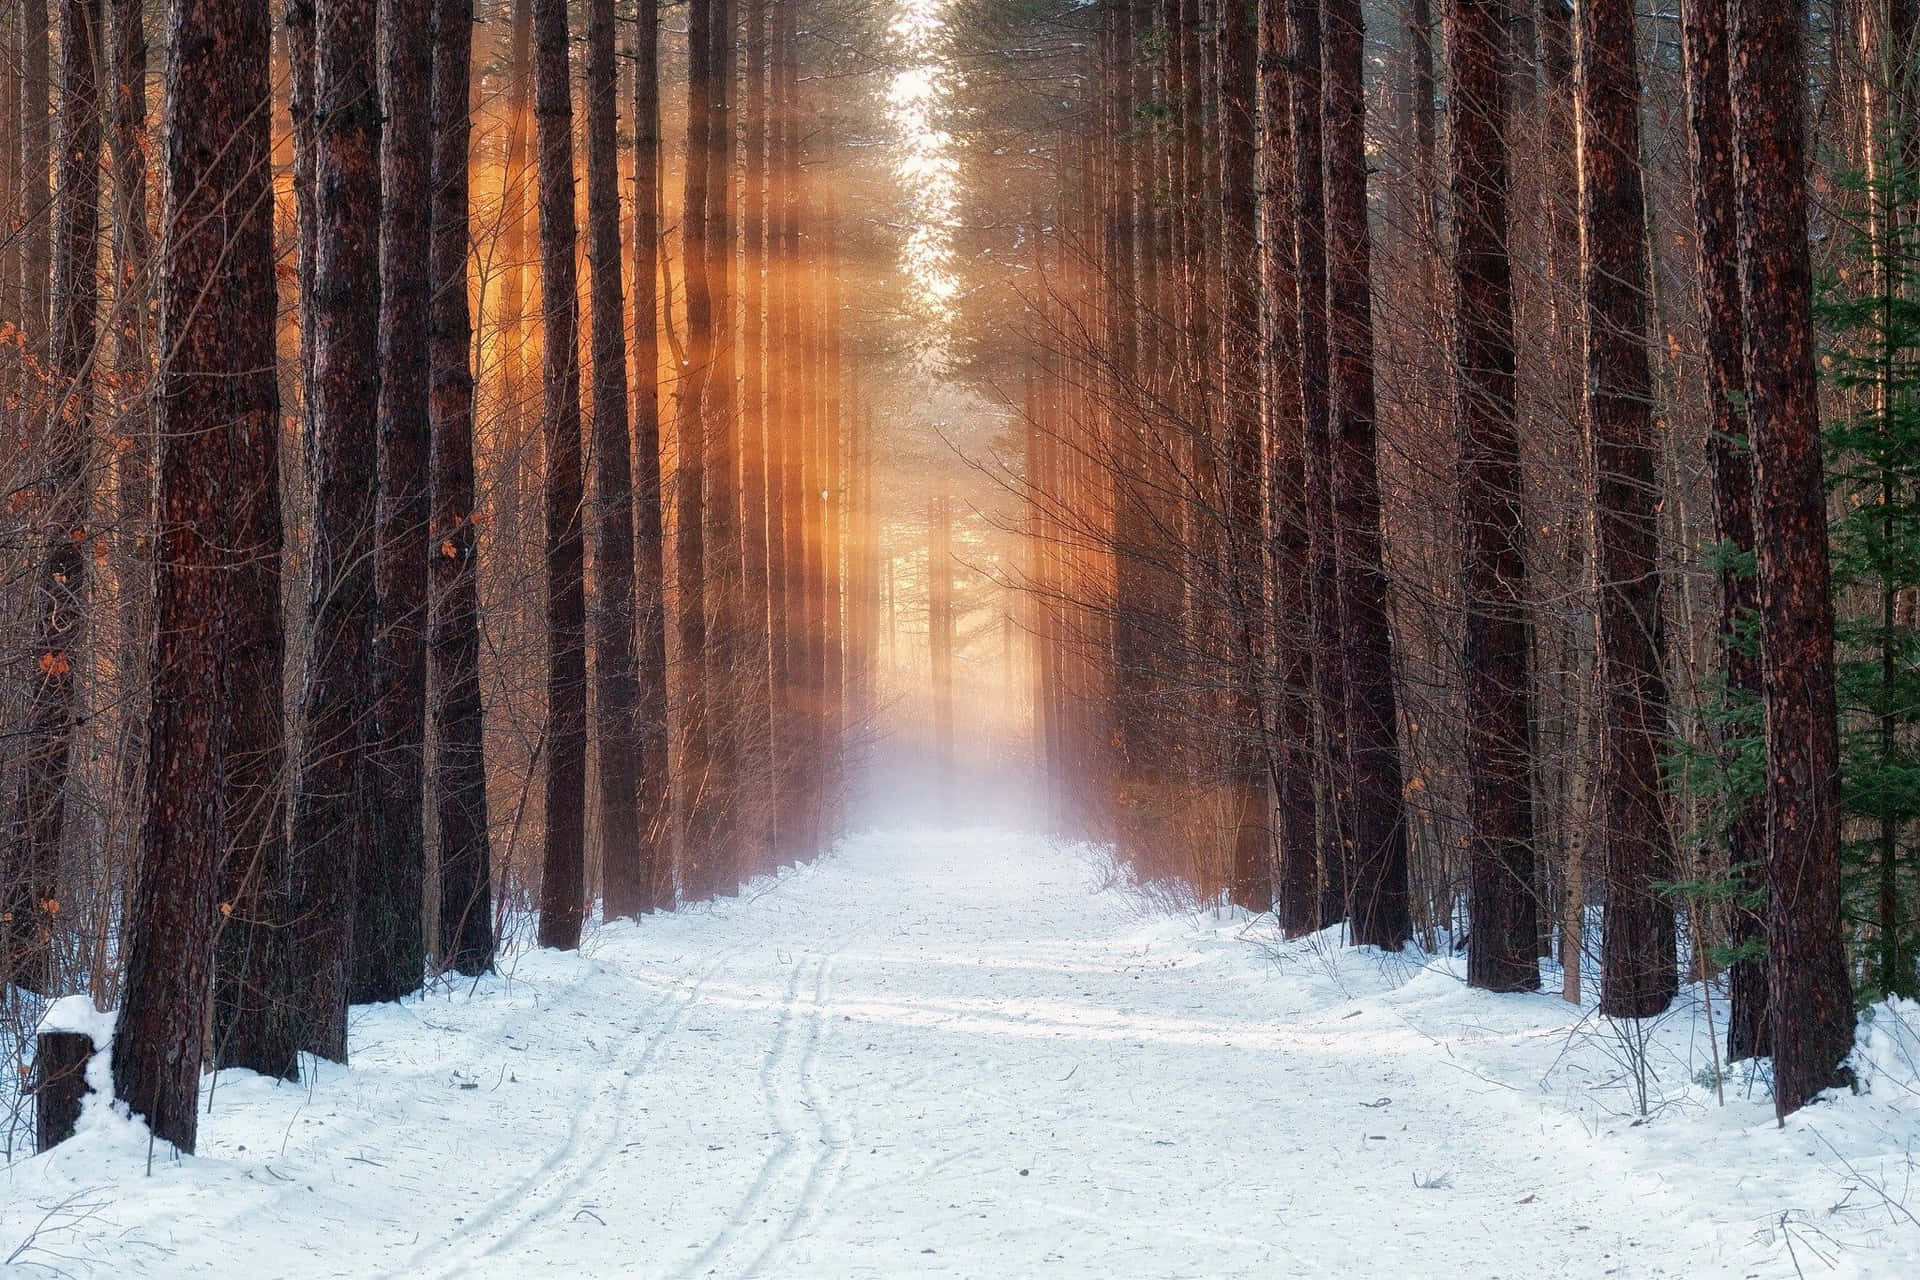 Take A Walk Through The Lush Winter Forest. Wallpaper